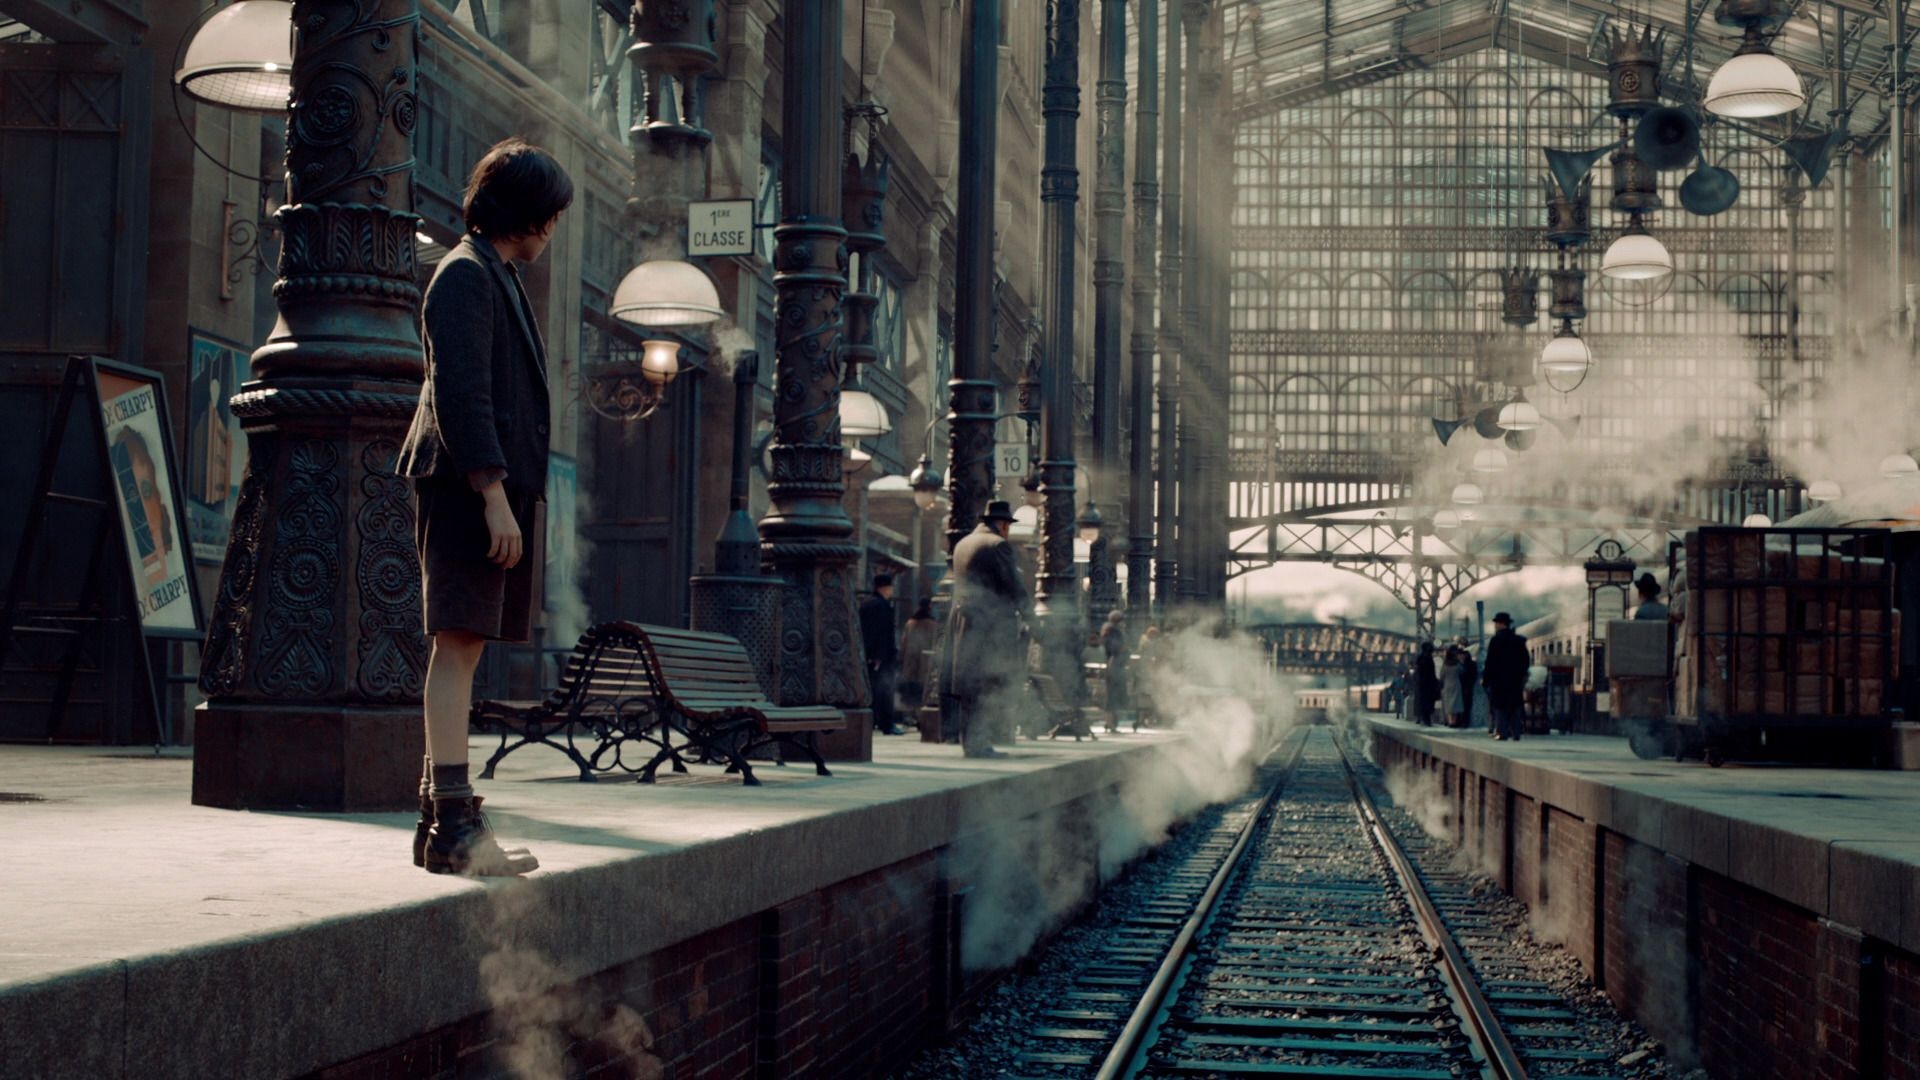 Girl girl scene movie. Хранитель времени вокзал. Хранитель времени поезд.